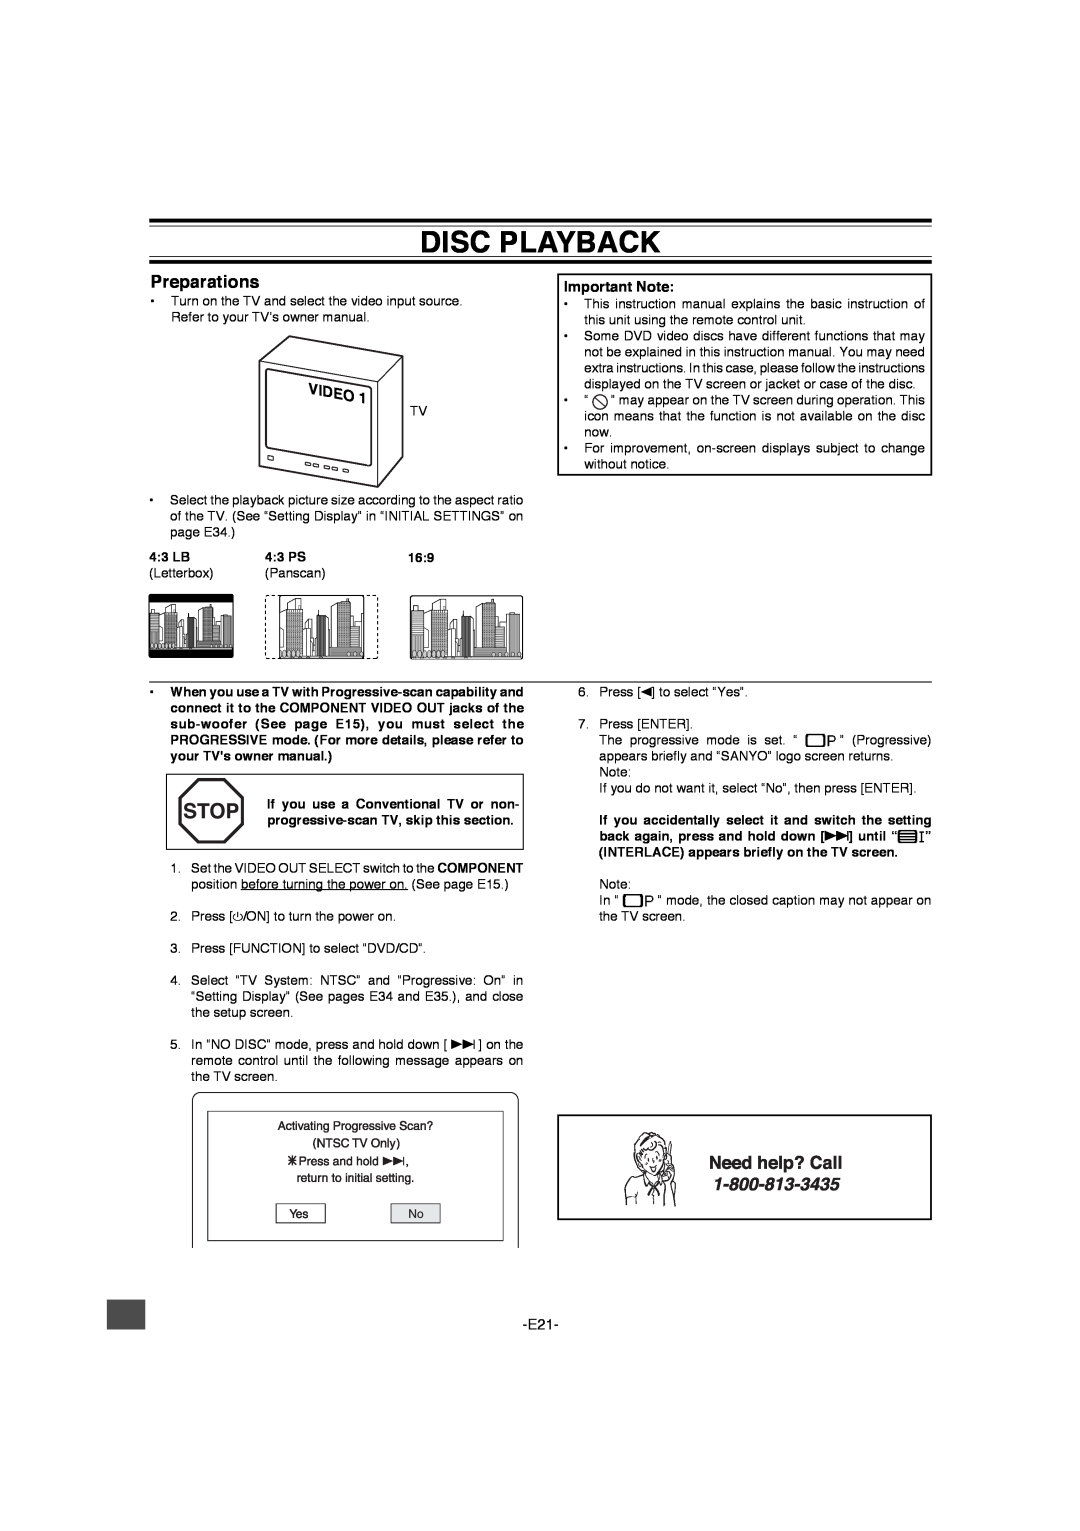 Sanyo DWM-4500 instruction manual Disc Playback, Preparations, 4 3 LB, 4 3 PS, Letterbox 